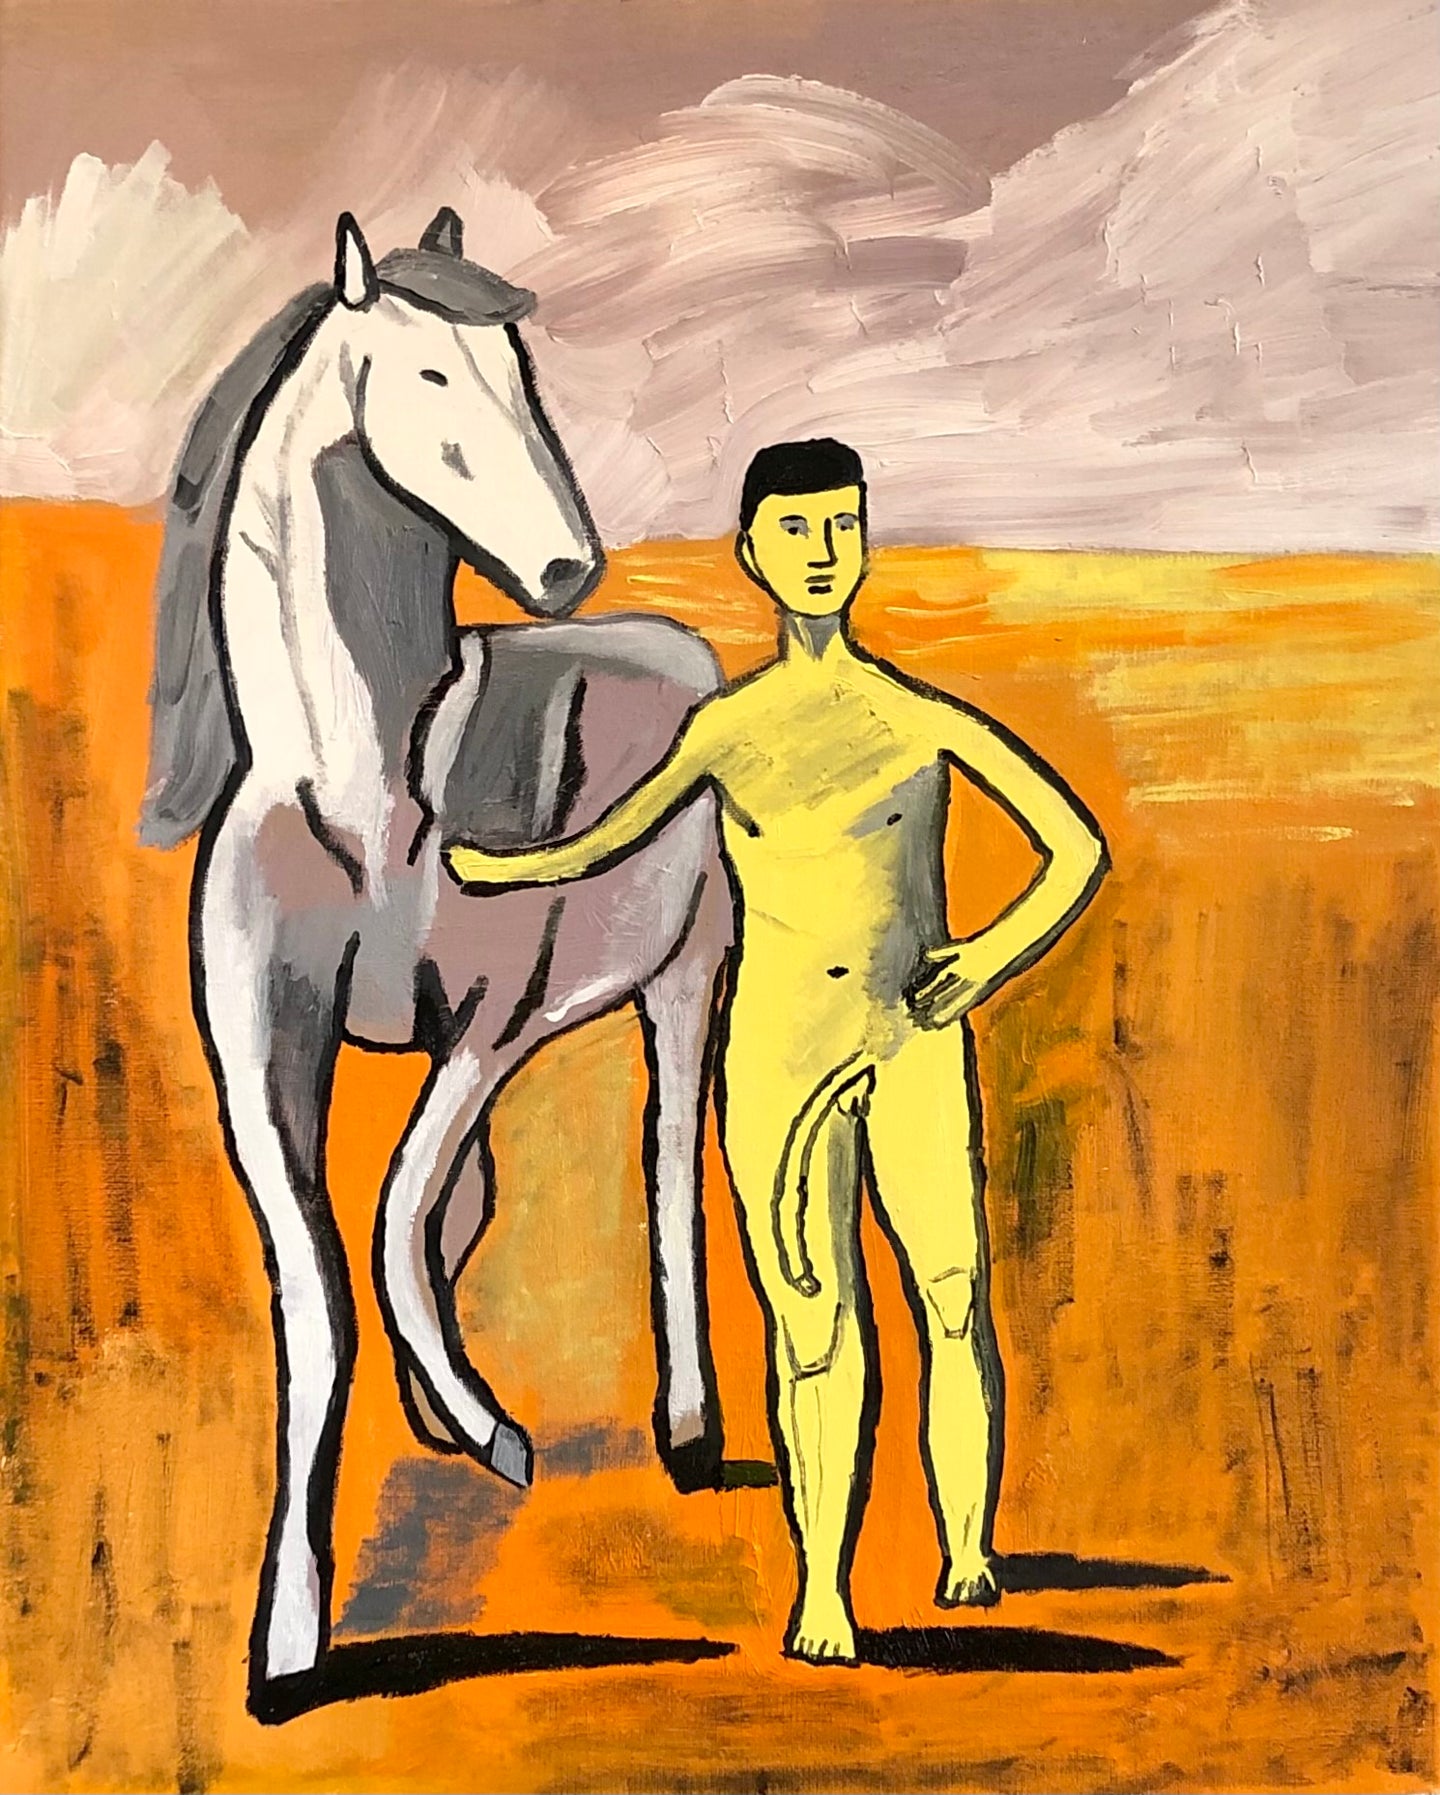 Boy Leading a Horse